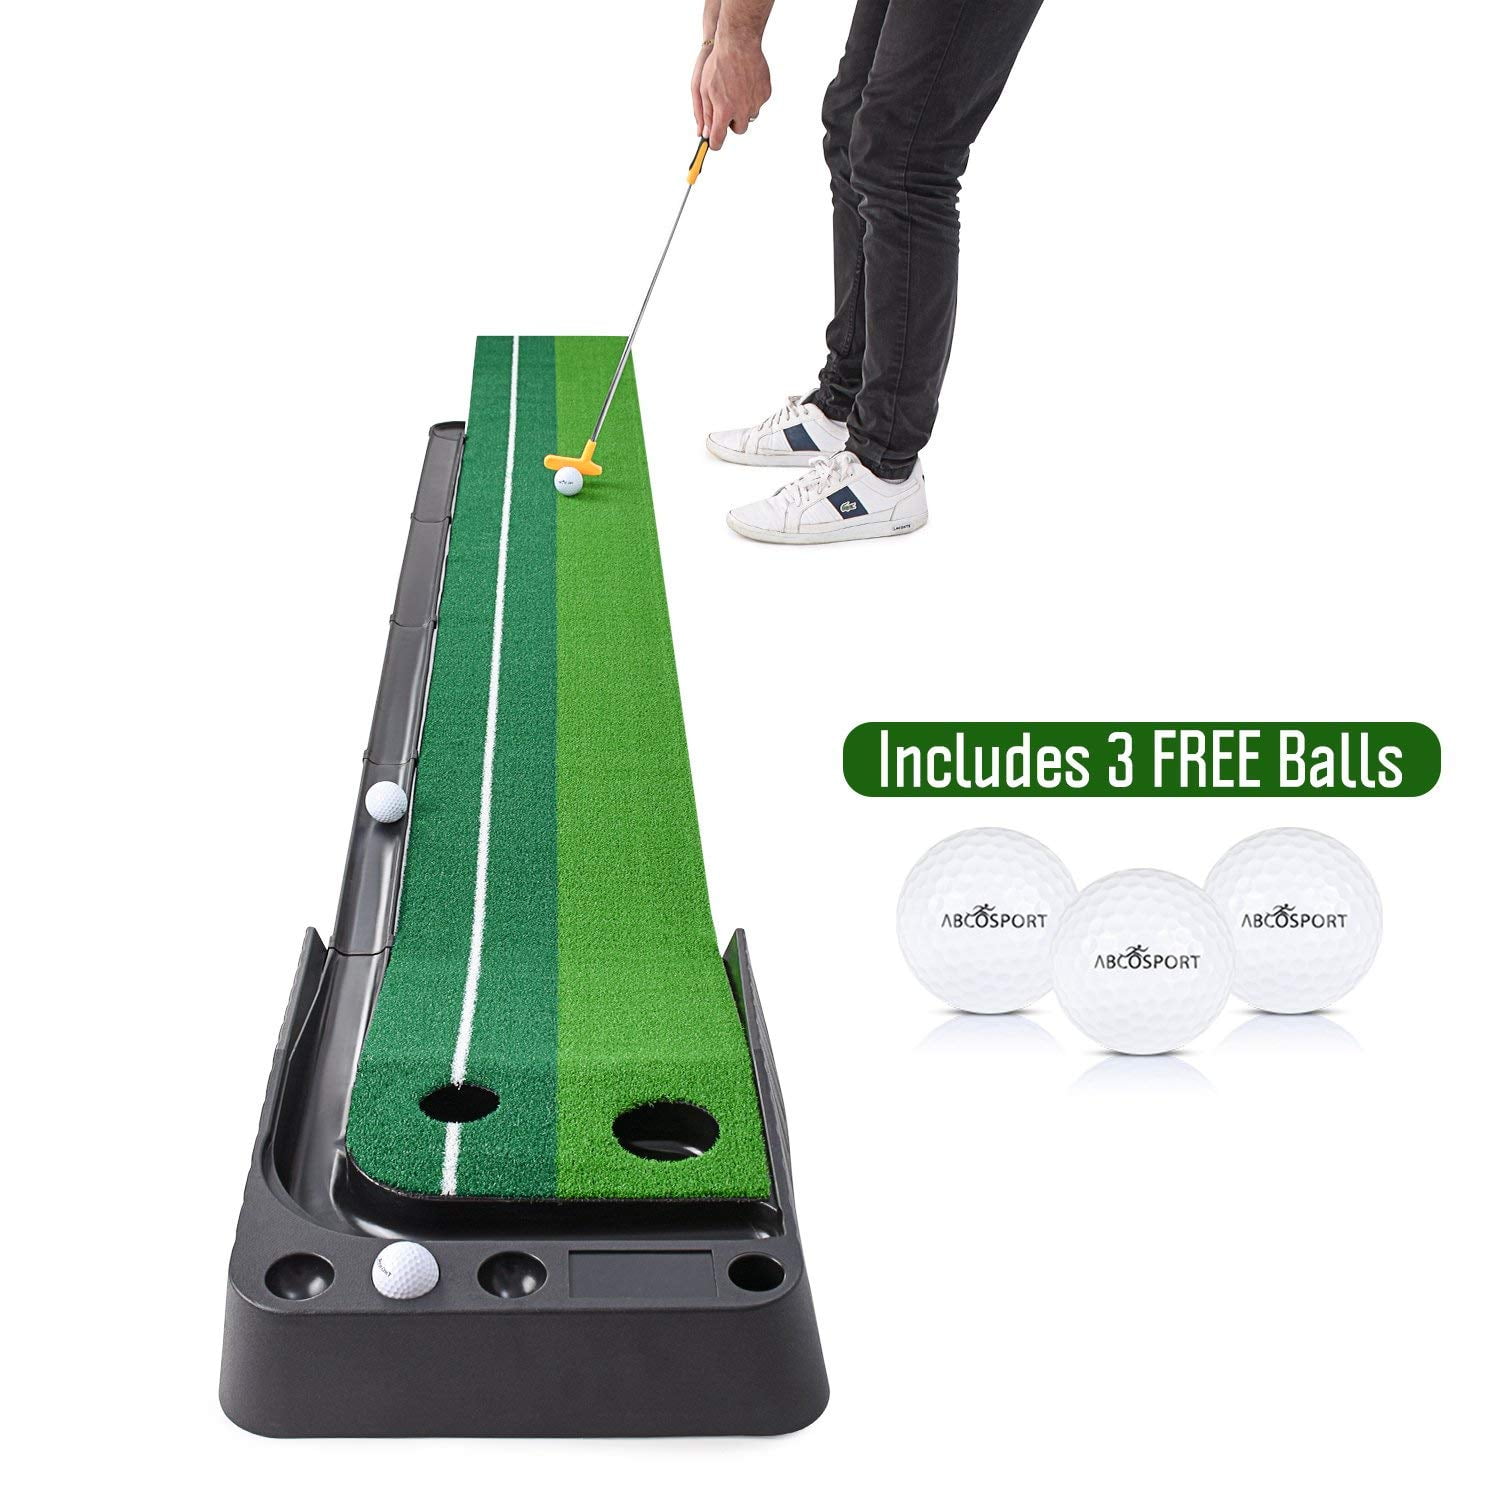 Abcosport Indoor Golf Putting Practice Mat – Auto Ball Return 